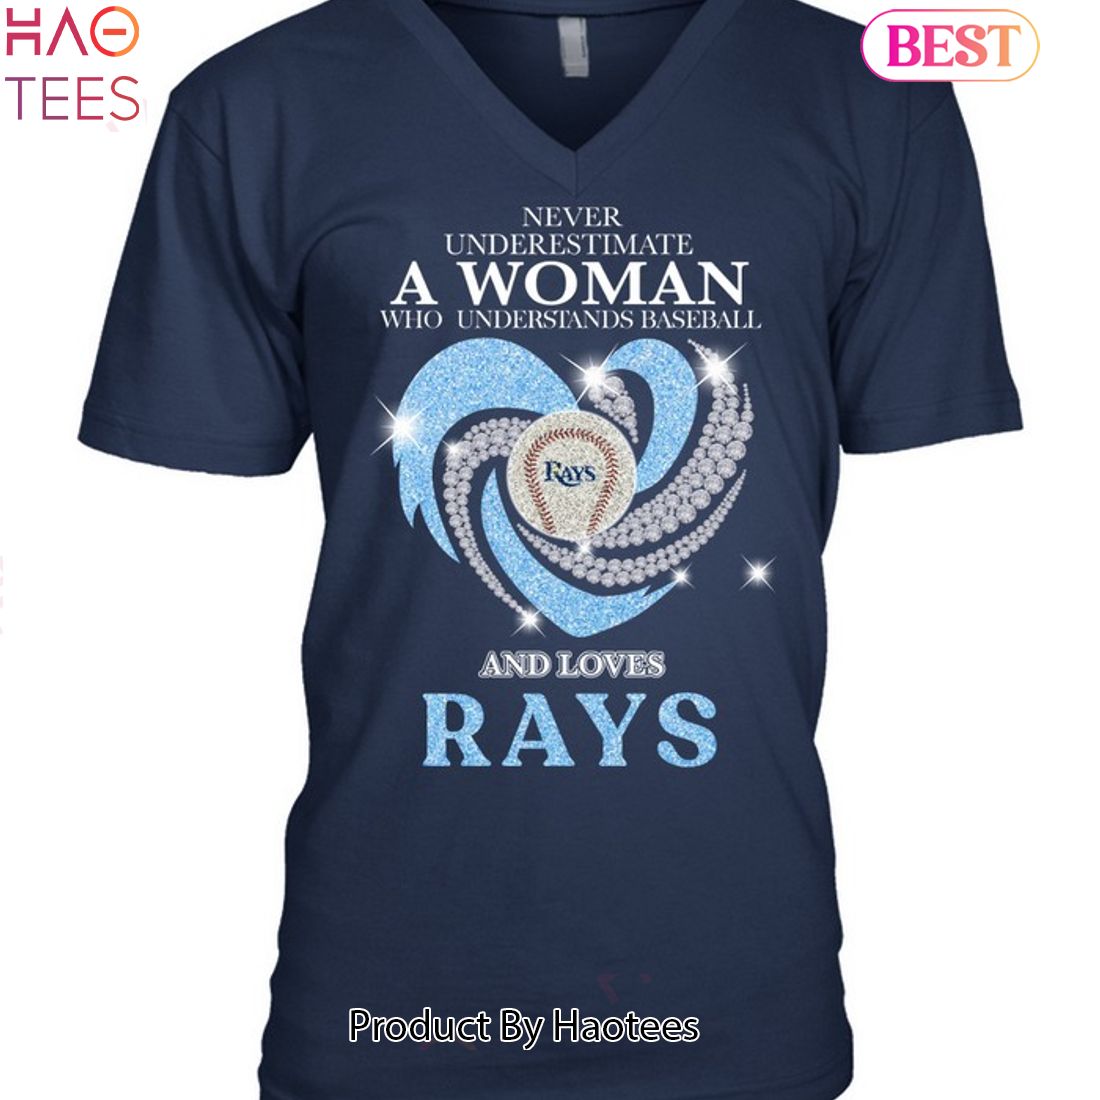 Tampa Bay Rays Baseball Love Tee Shirt 4T / Navy Blue